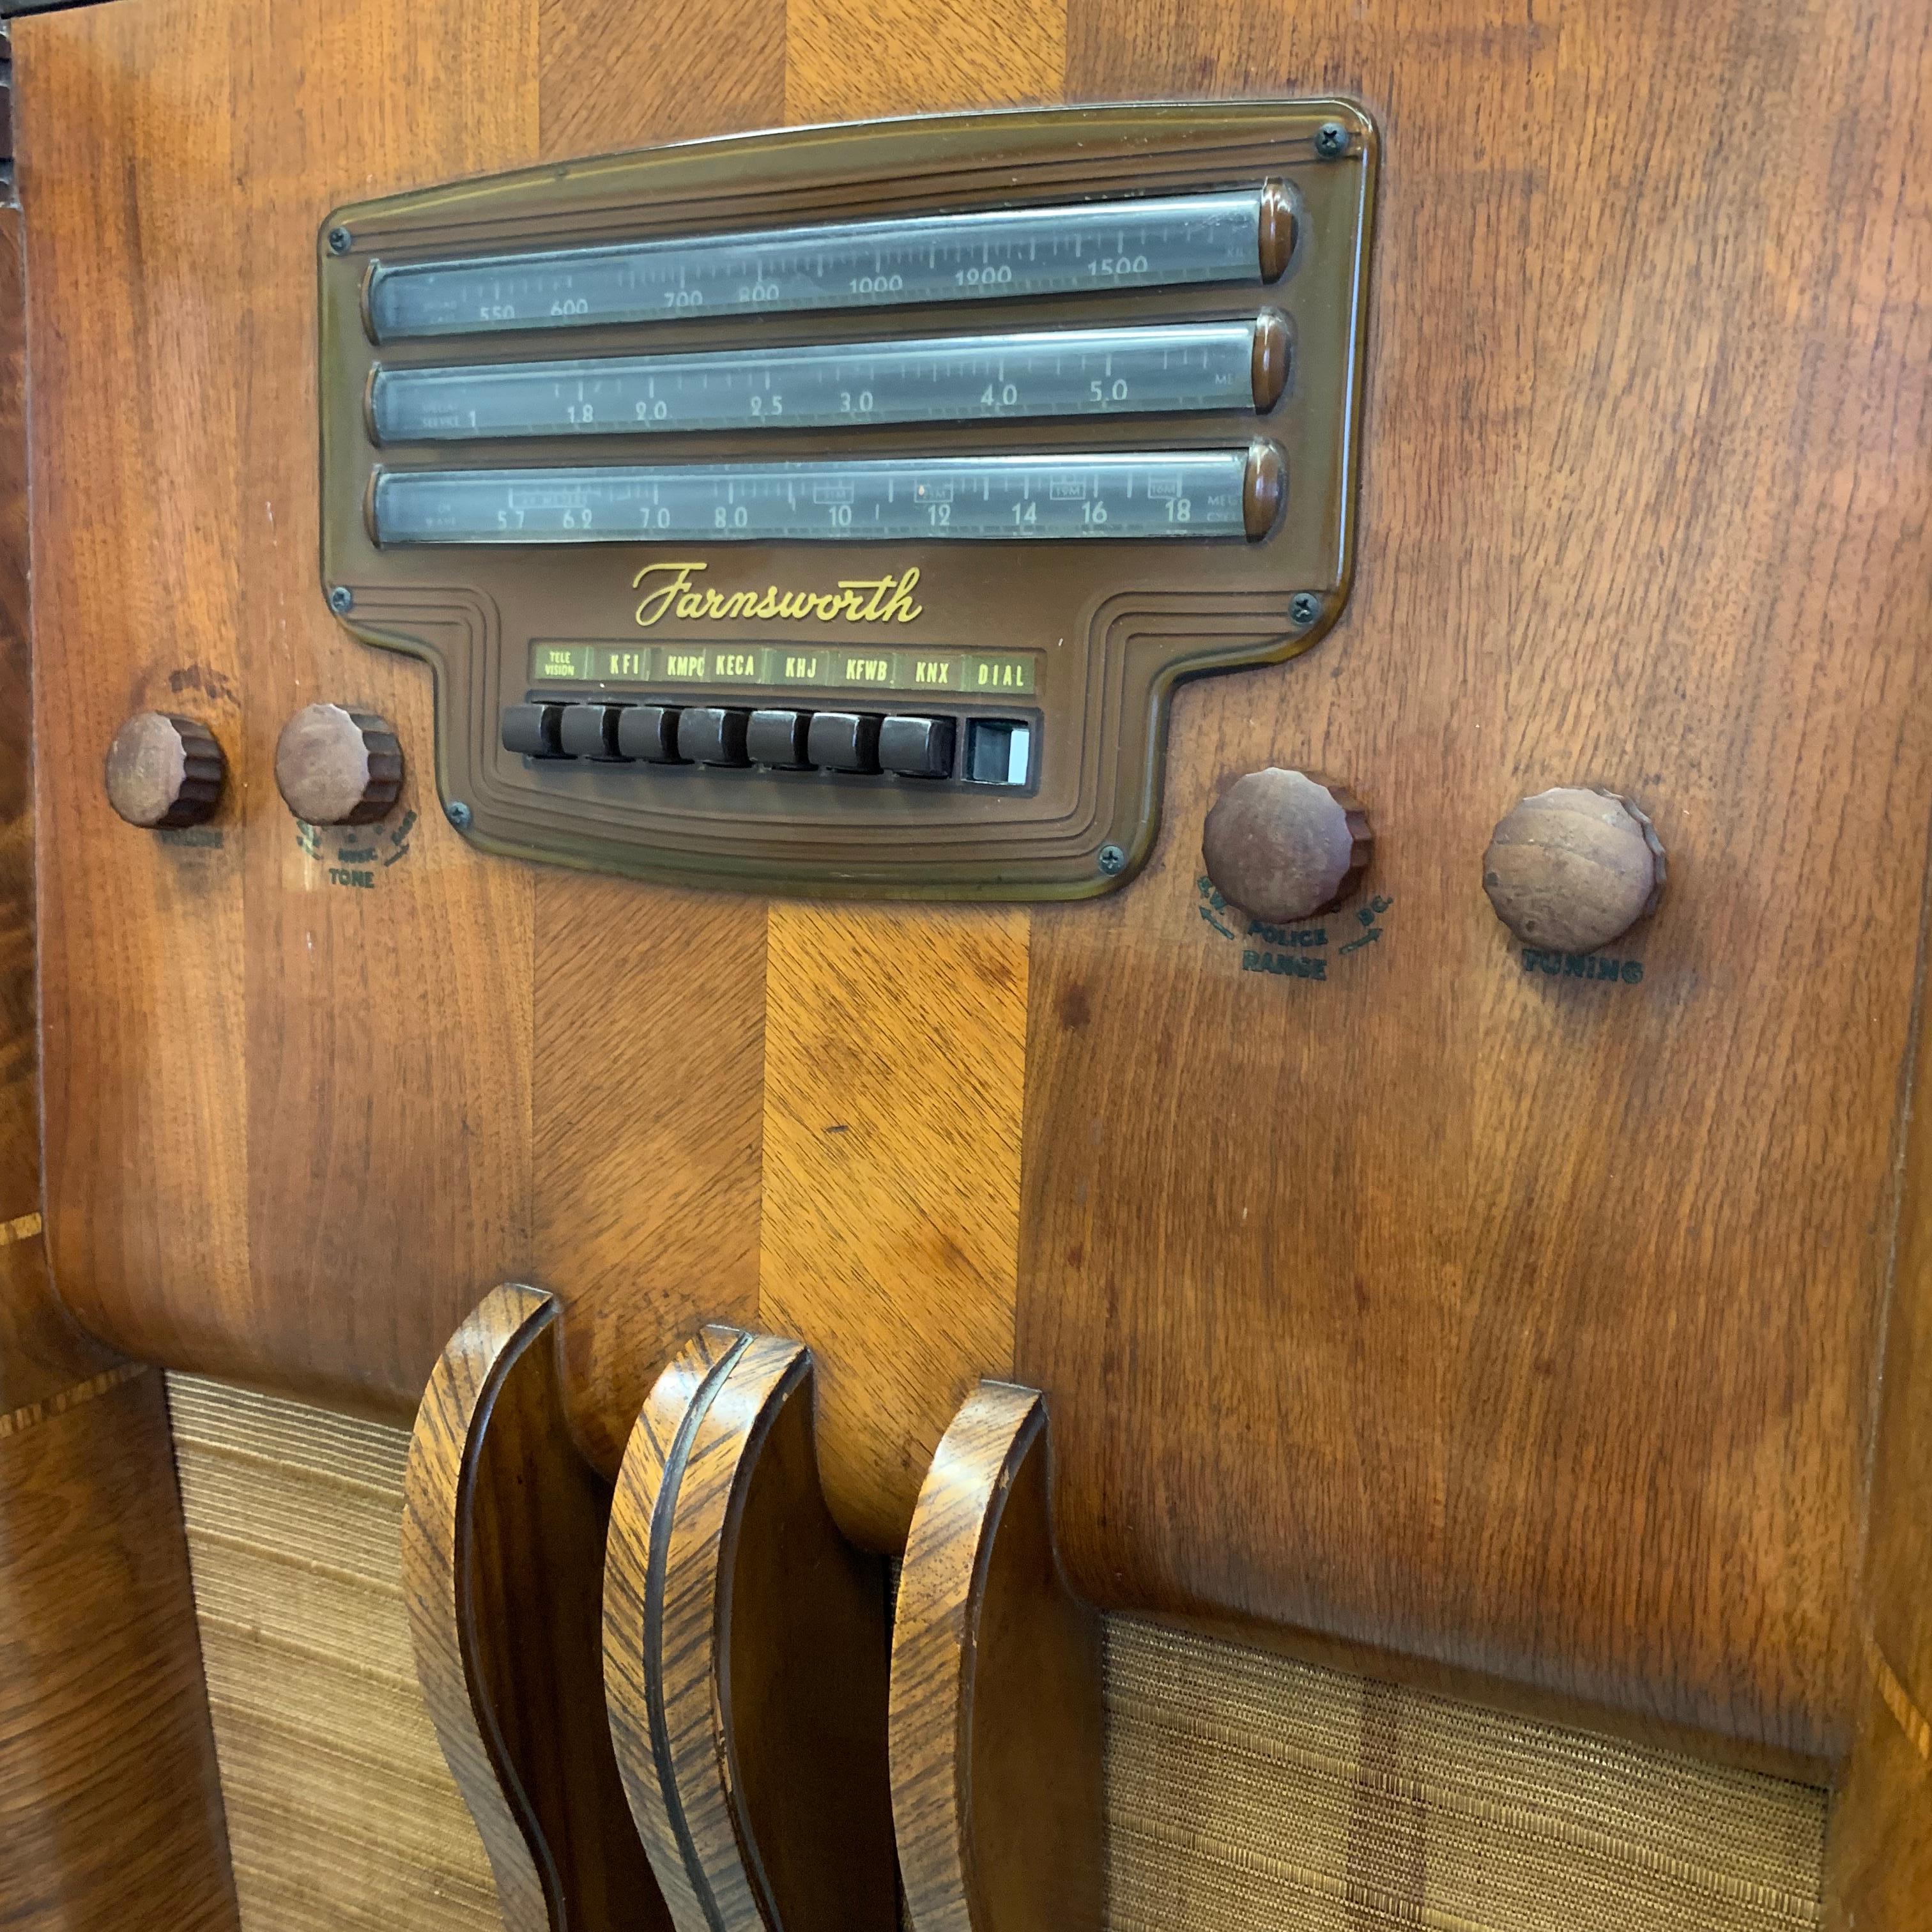 Mid-Century Modern Vintage Floor Radio by Farnsworth Television and Radio Corp